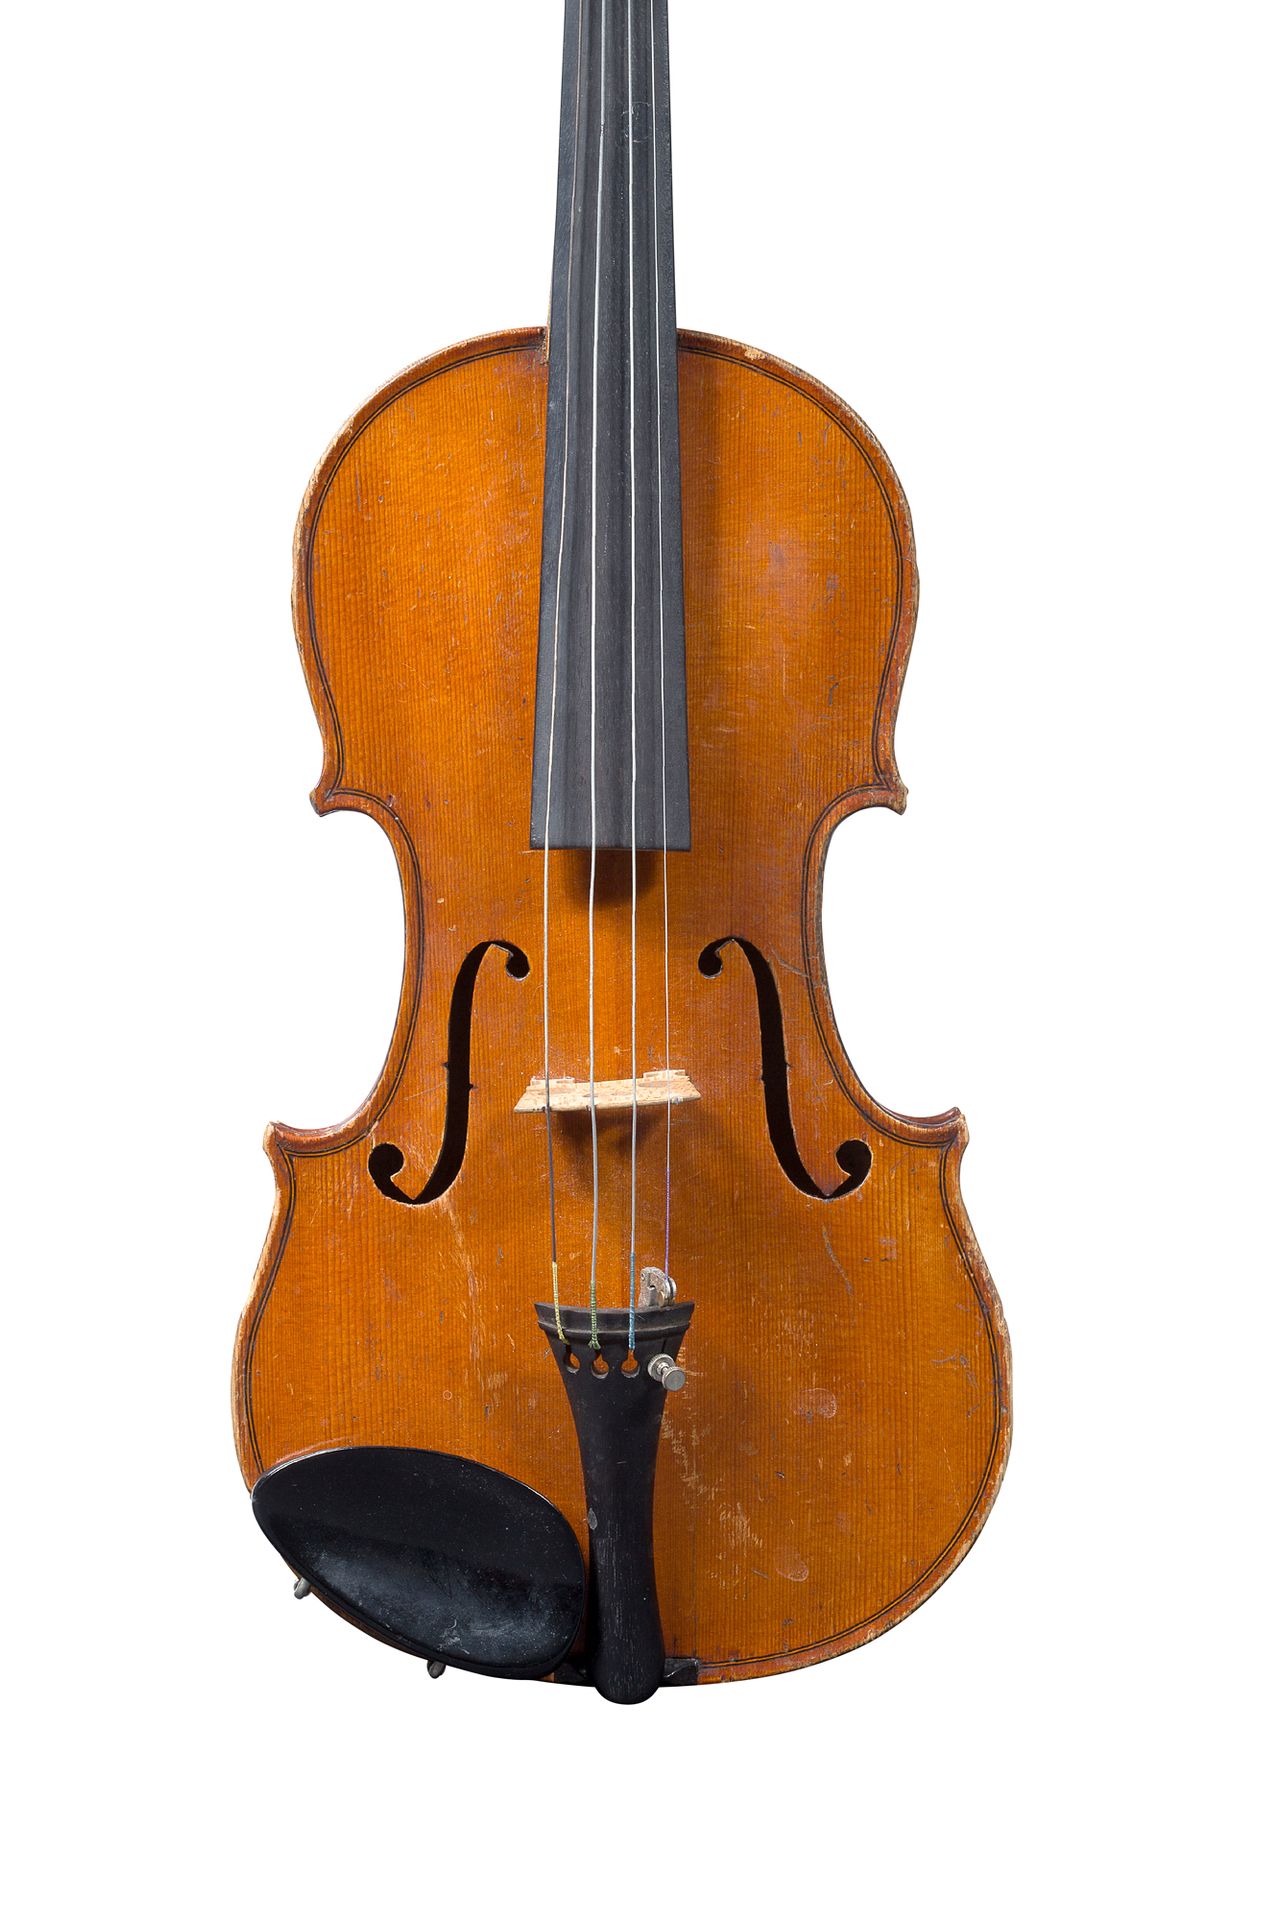 Null 3/4尺寸的小提琴
20世纪初在Mirecourt制造
工业制造
左侧鳍片断裂，背部关节轻微脱落 
背面335毫米